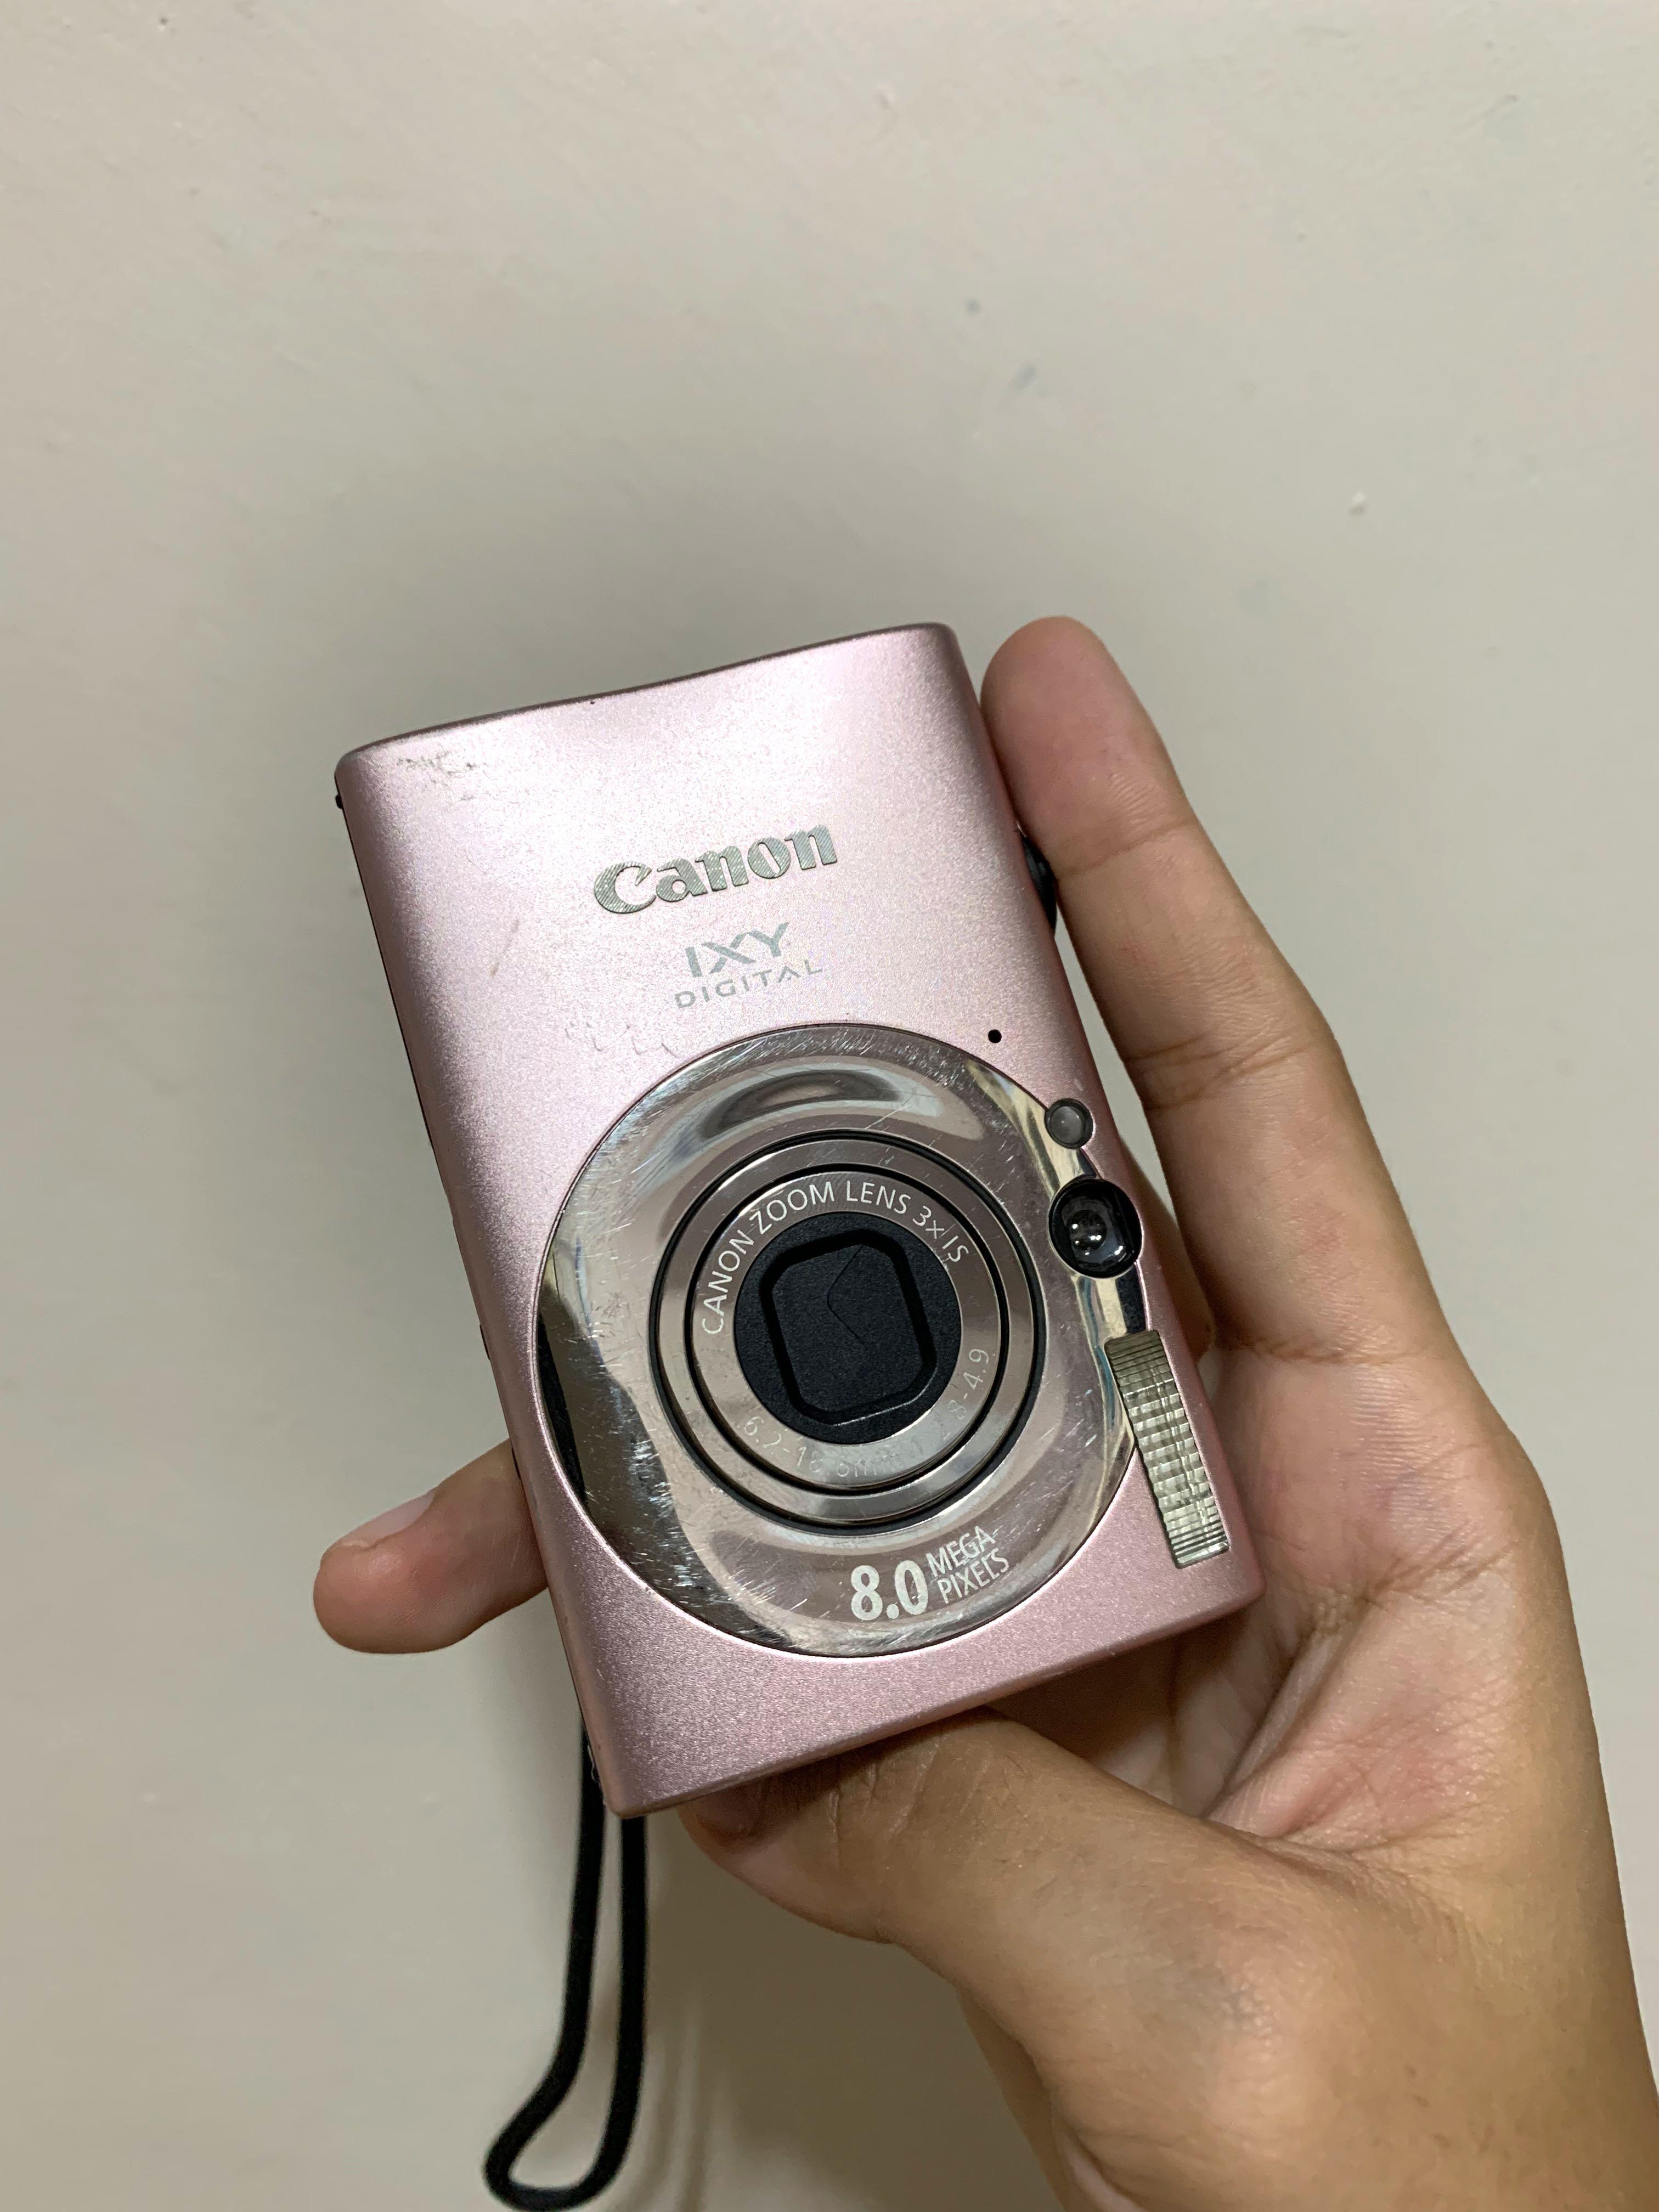 Canon Digital Ixy 20 IS Digital Camera | Digicam, Photography